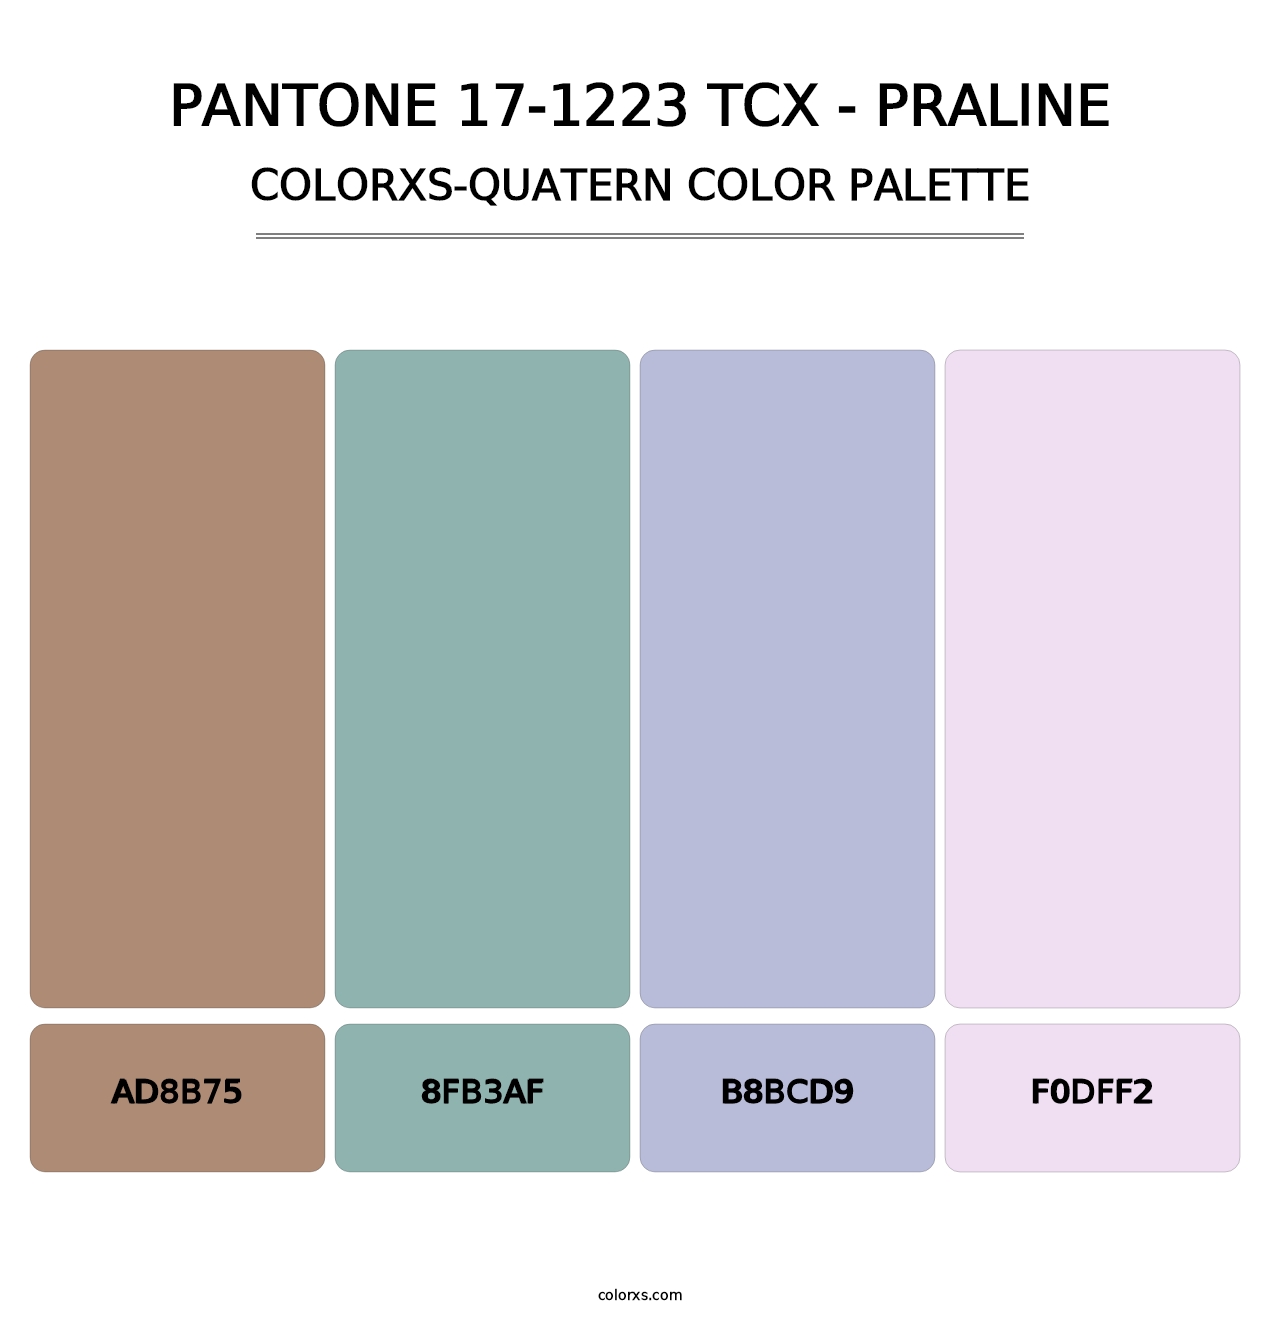 PANTONE 17-1223 TCX - Praline - Colorxs Quatern Palette